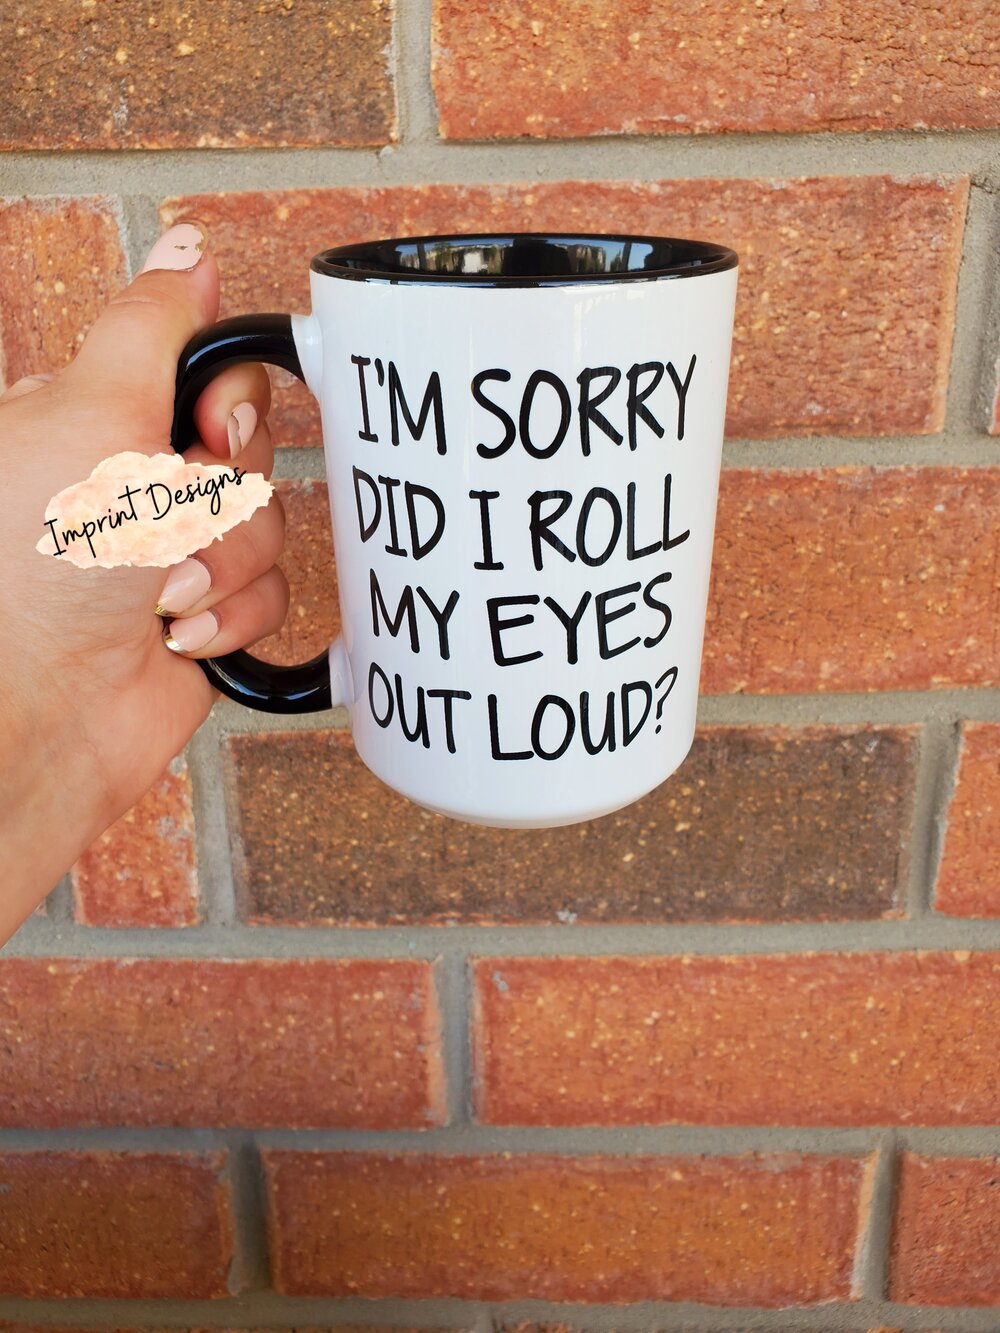 Eyes Roll Out Loud Mug